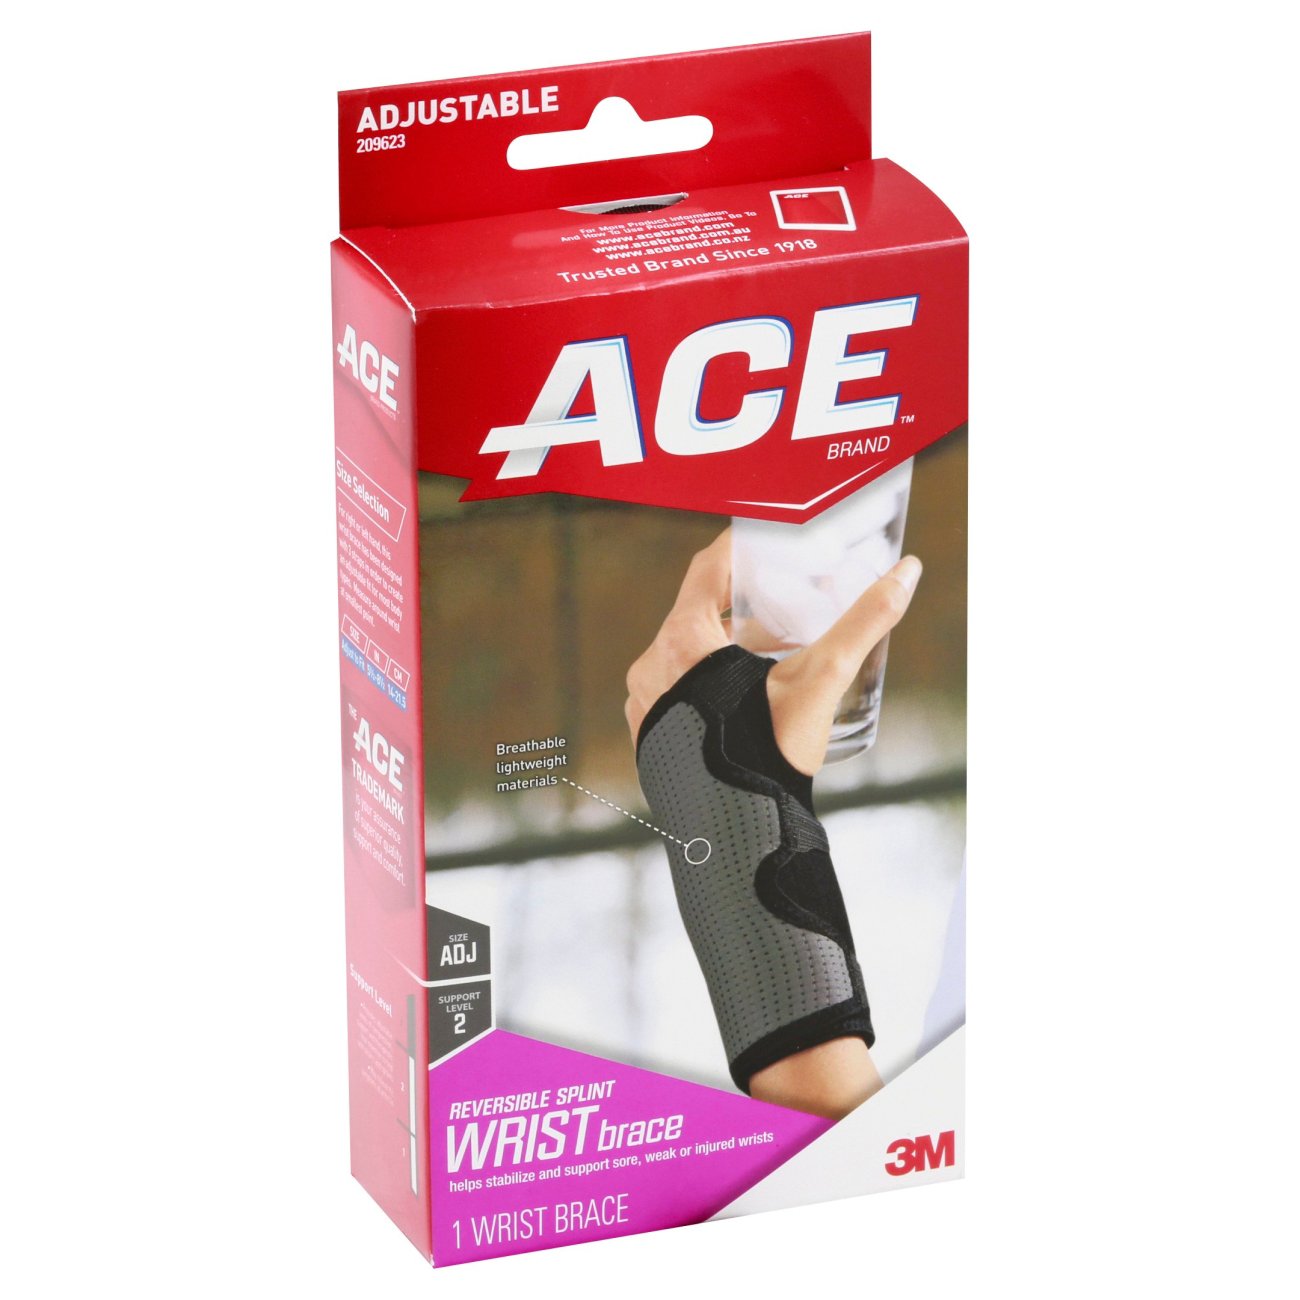 Ace Moderate-Stabilizing Adjustable Splint Wrist Brace - Shop Sleeves &  Braces at H-E-B